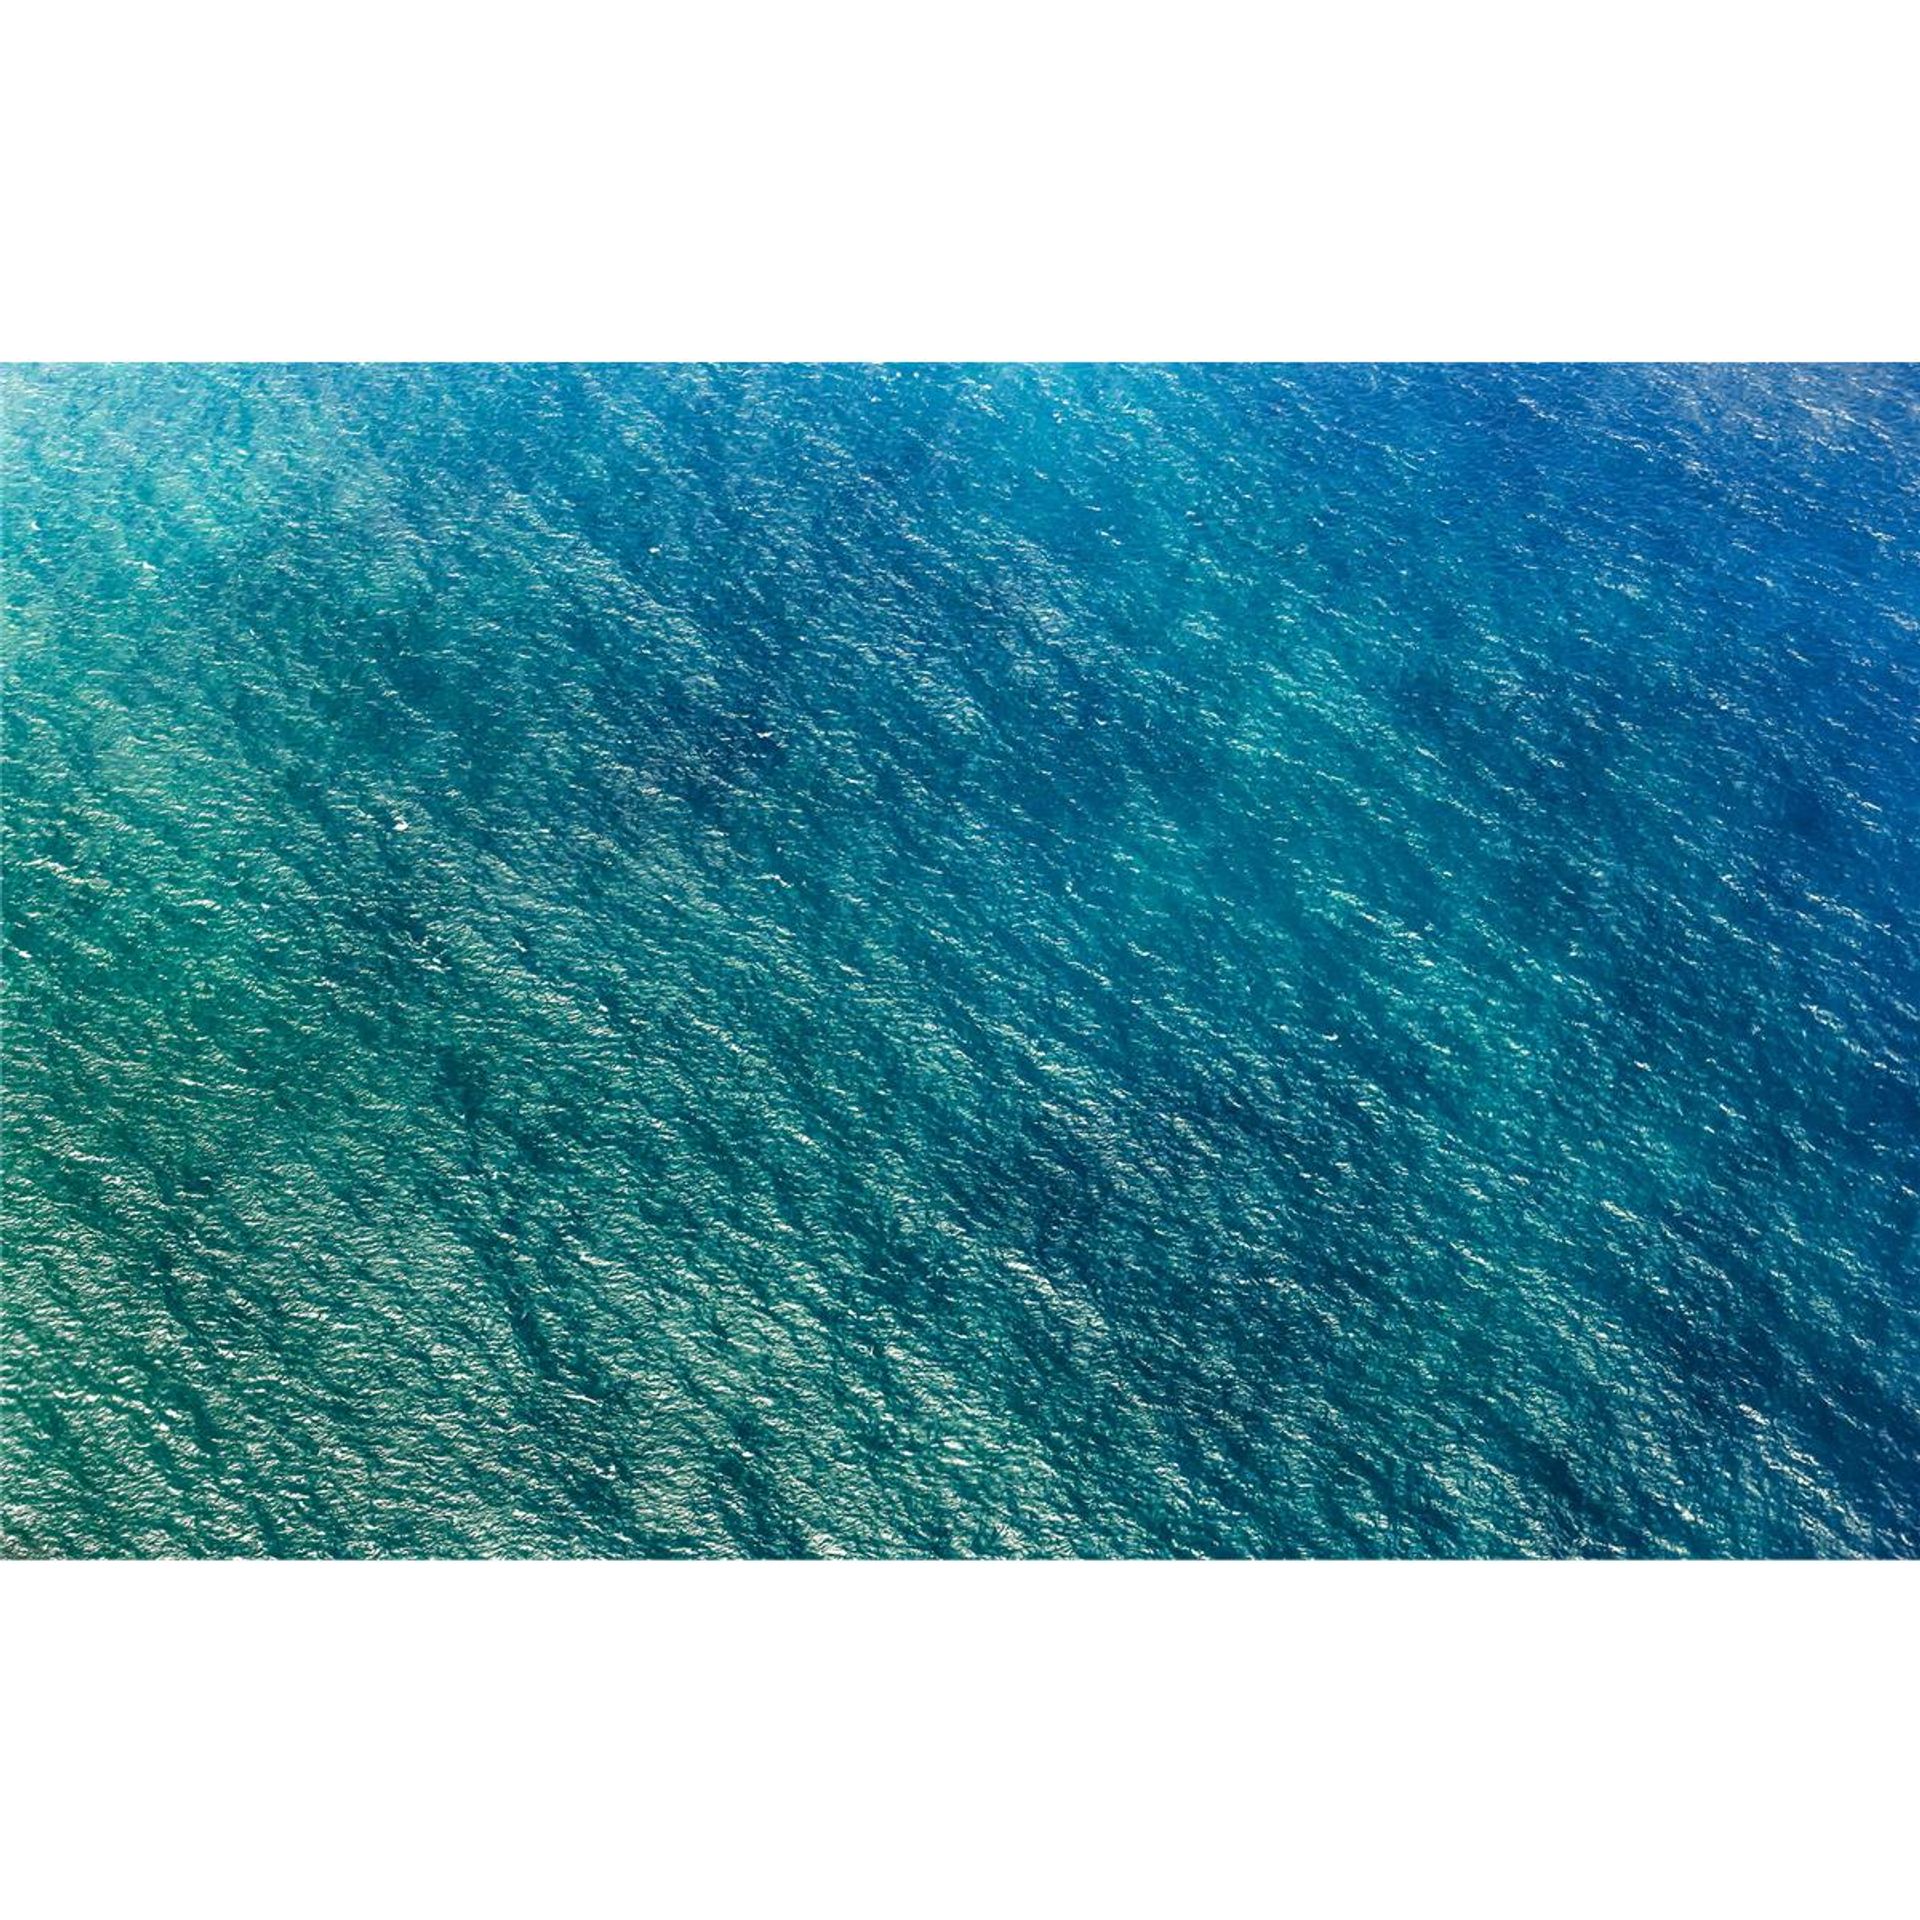 Vlies Fototapete - Blaupause - Größe 400 x 250 cm